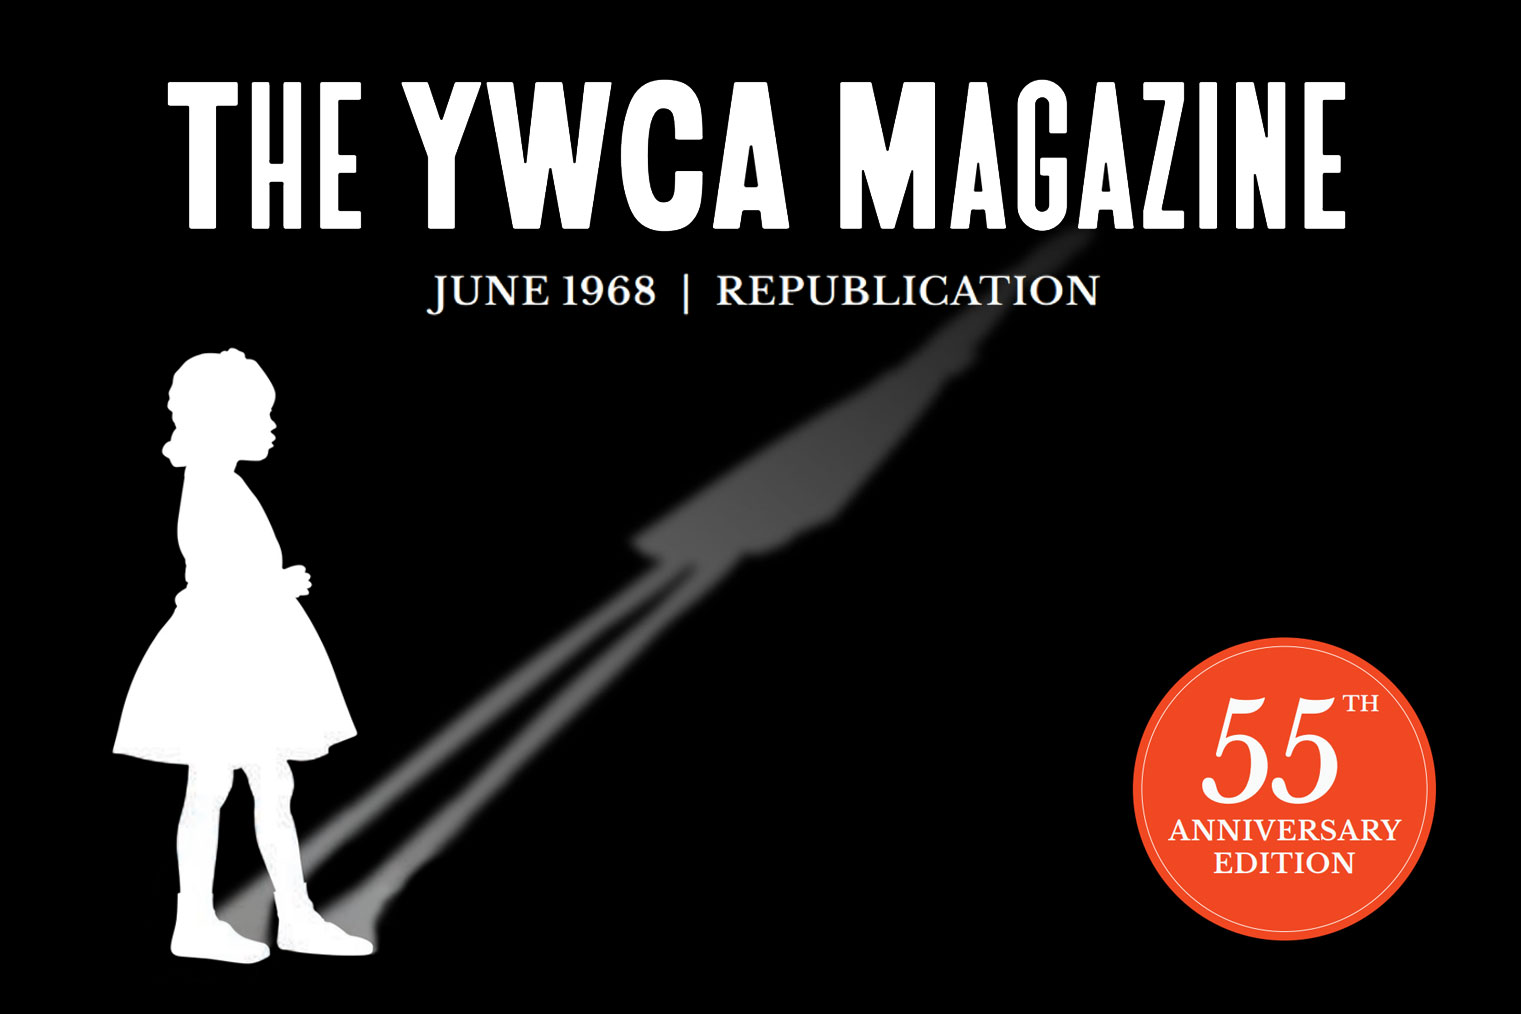 The YWCA Magazine. June 1968 Republication. 55th Anniversary Edition.